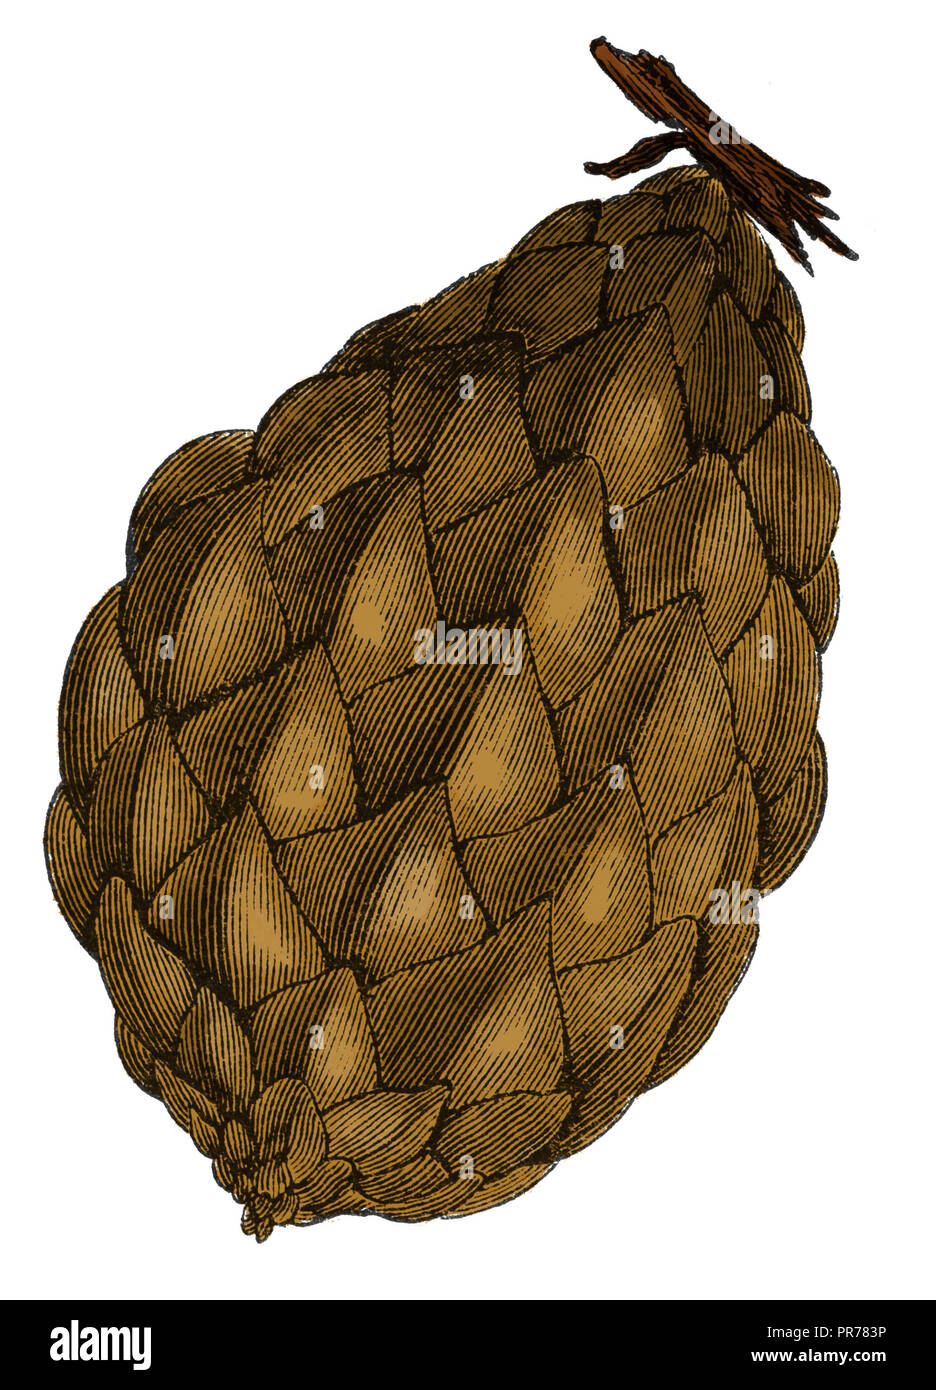 19th century illustration of a fruit of metroxylon sagu (sagu palm). Published in Systematischer Bilder-Atlas zum Conversations-Lexikon, Ikonographisc Stock Photo